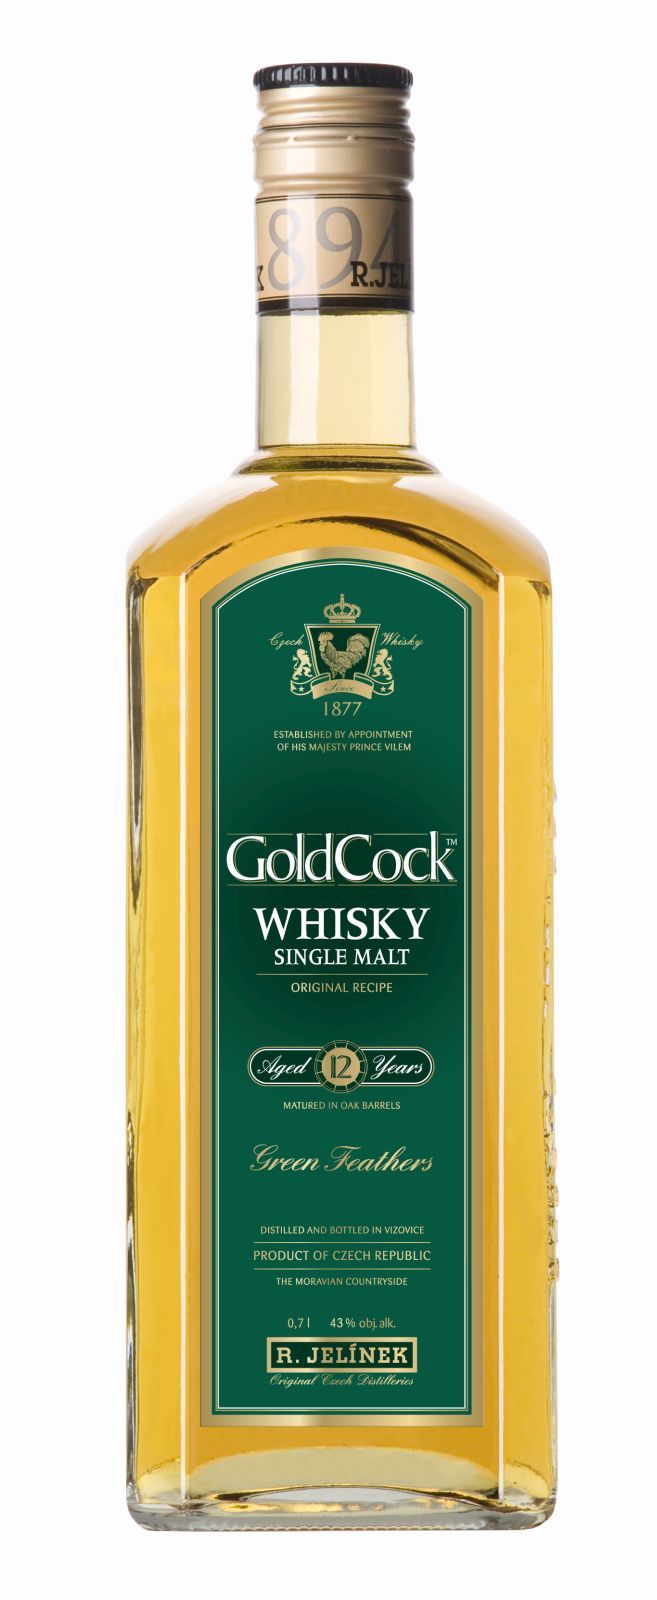 Gold Cock Whisky捷克金公鸡威士忌12年 0,7L详情图7